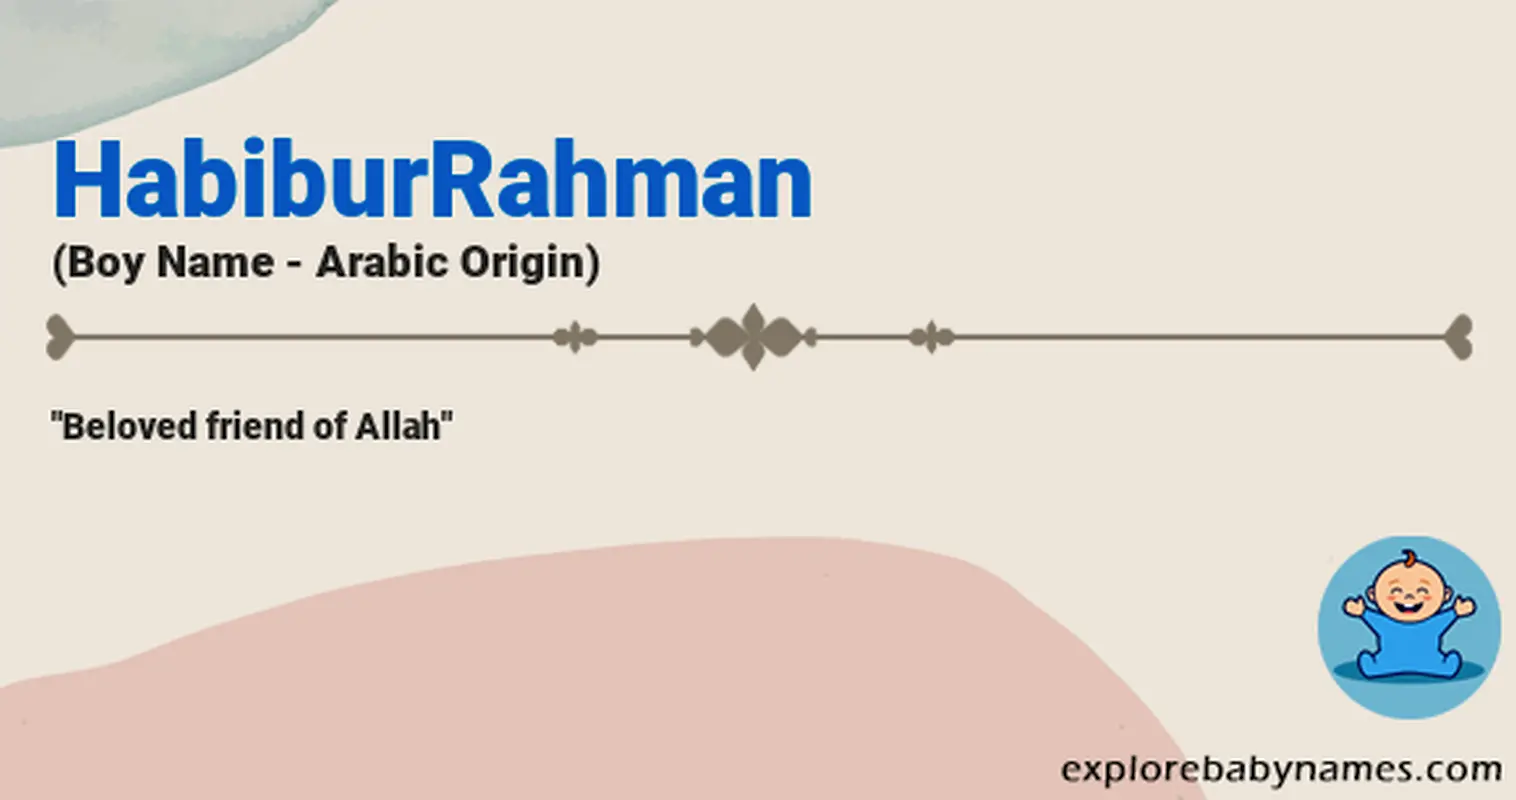 Meaning of HabiburRahman